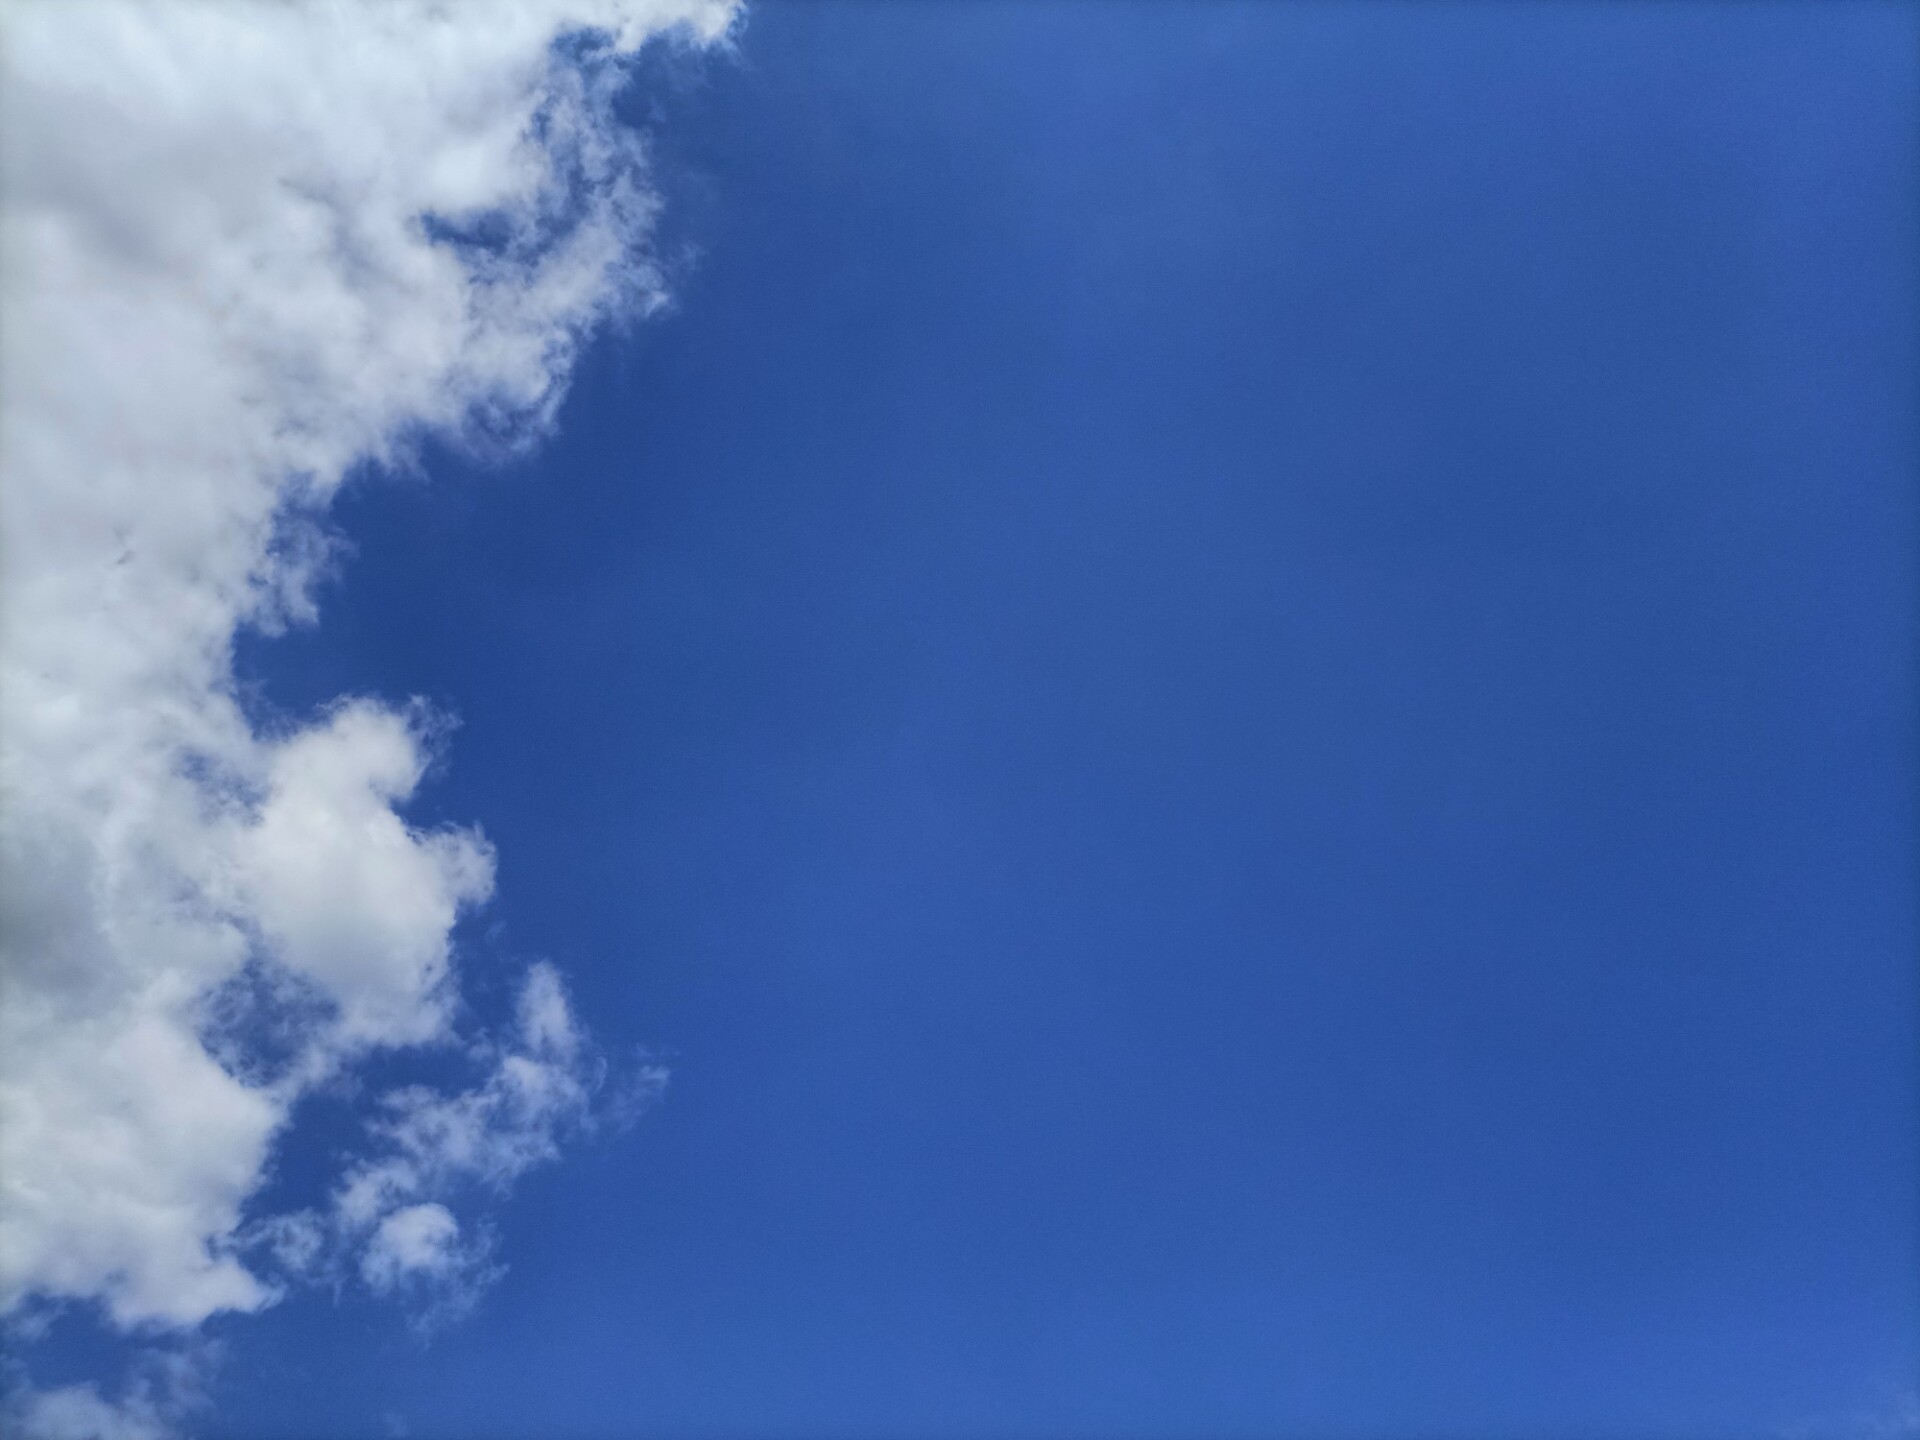 Blue Sky wit a cloud on the left